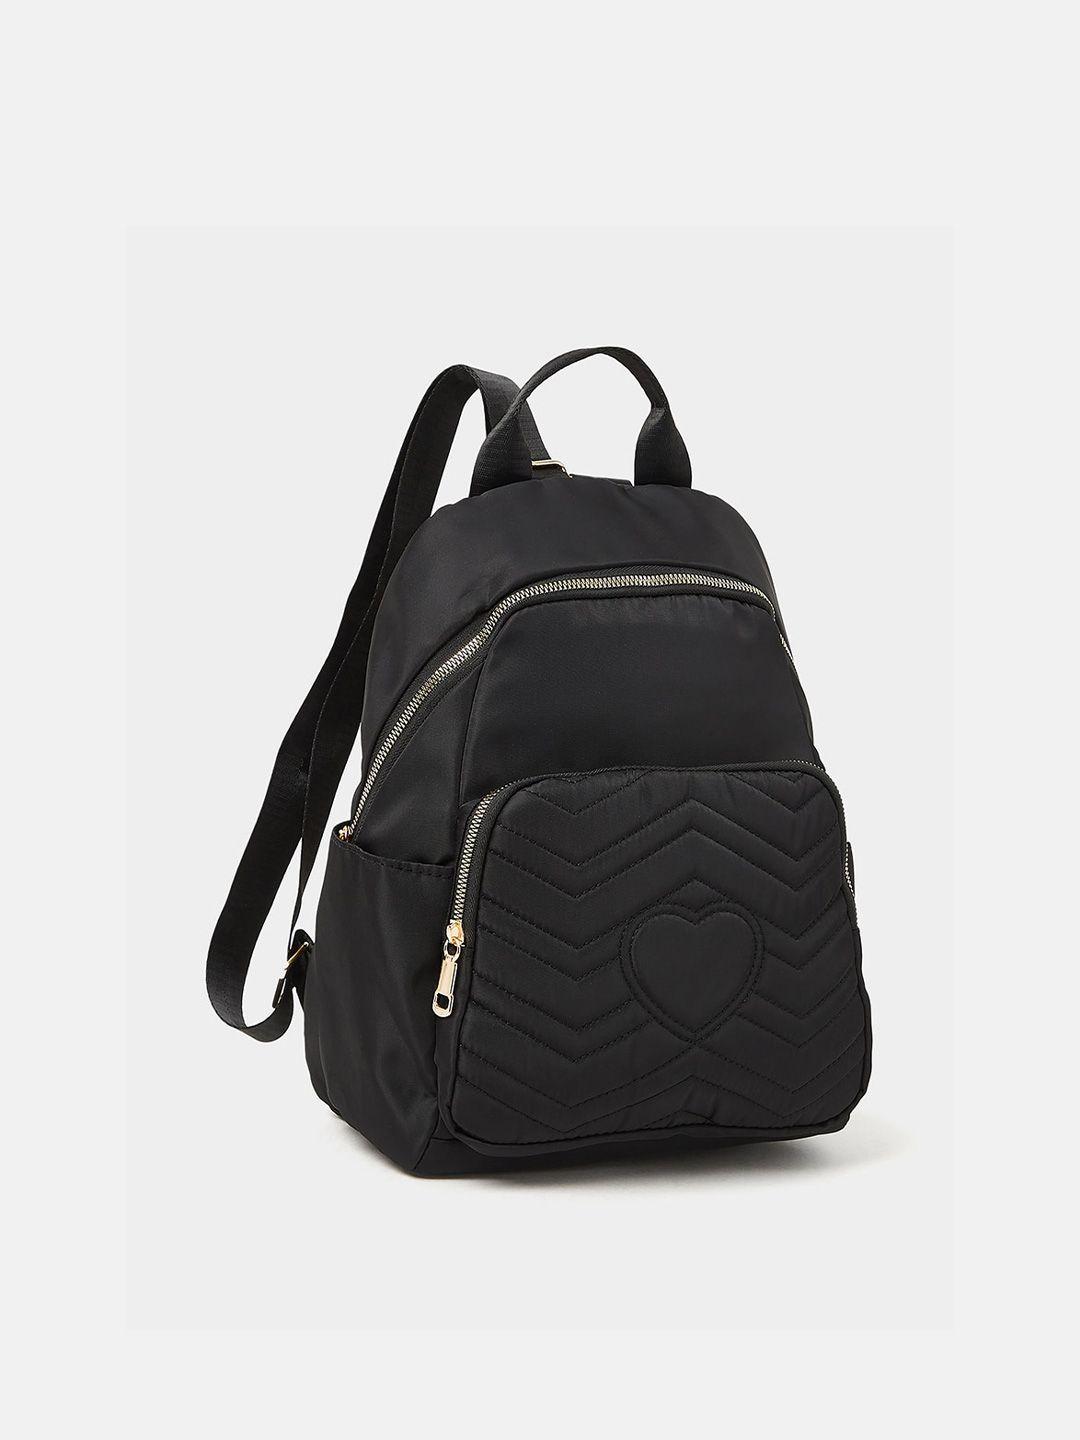 styli women medium size backpack